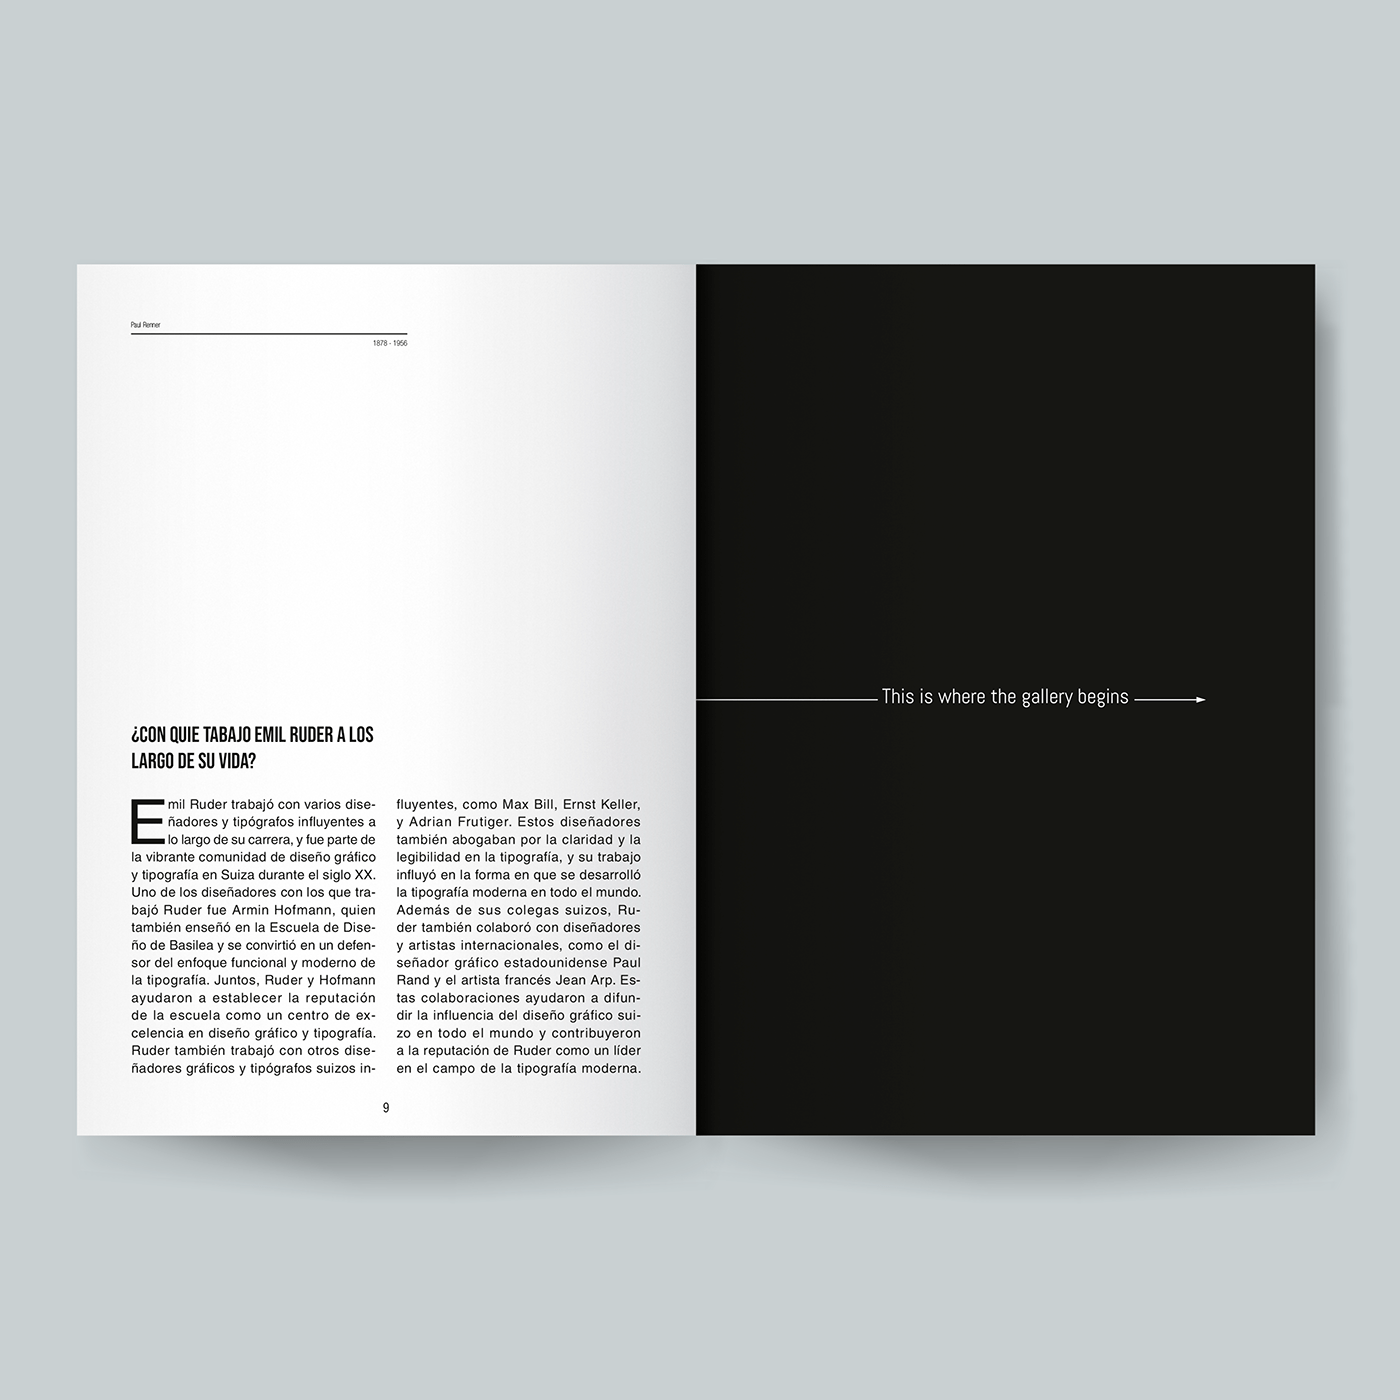 Diseño editorial editorial design  emil ruder InDesign industrial design  maqutacion y diseño paul renner revista text typography  